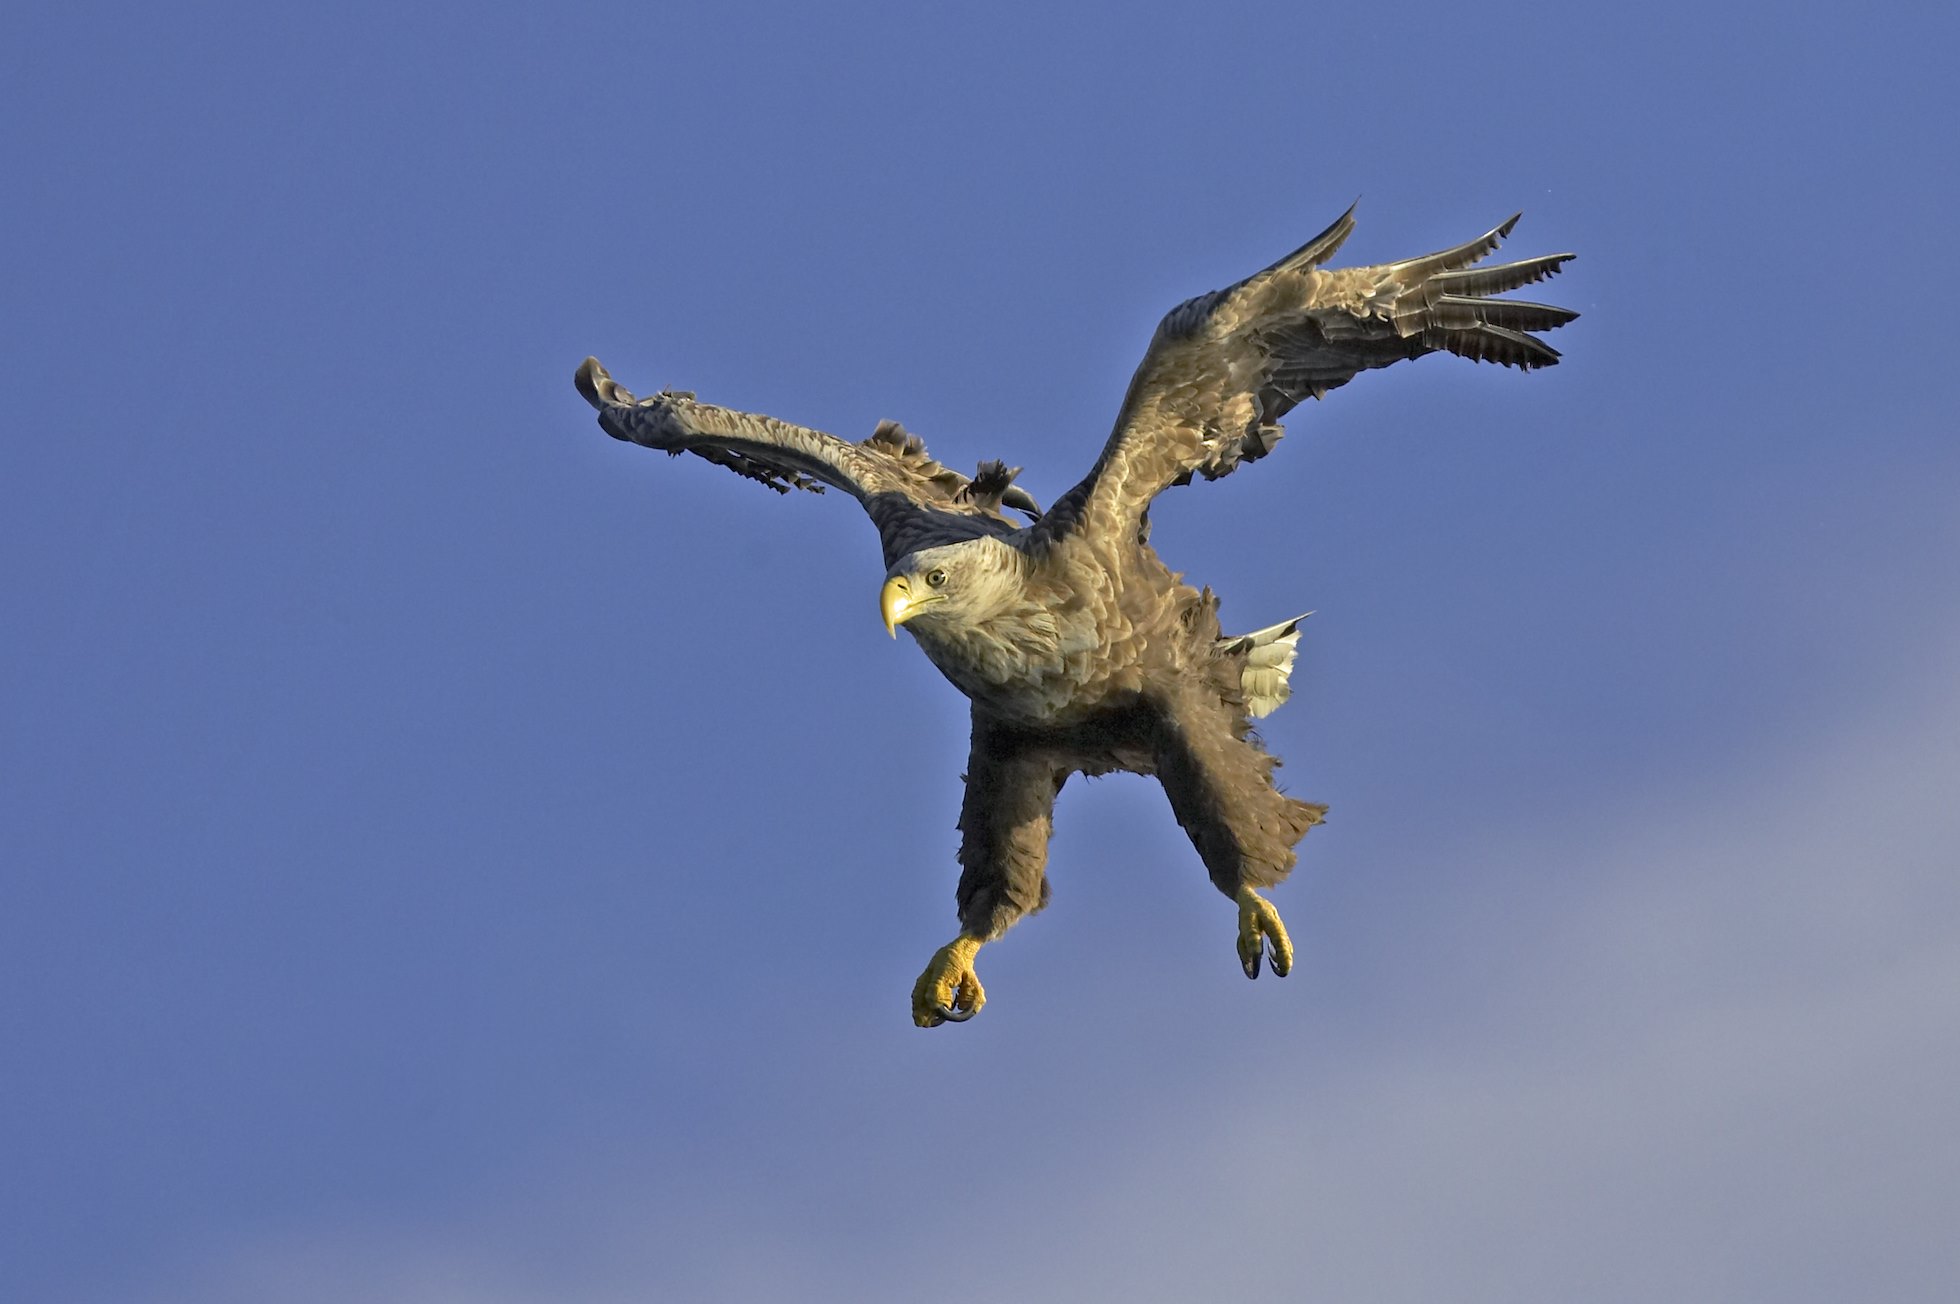 Sea eagle (Haliaeetus albicilla) in flight against blue sky, Flatanger, Norway.